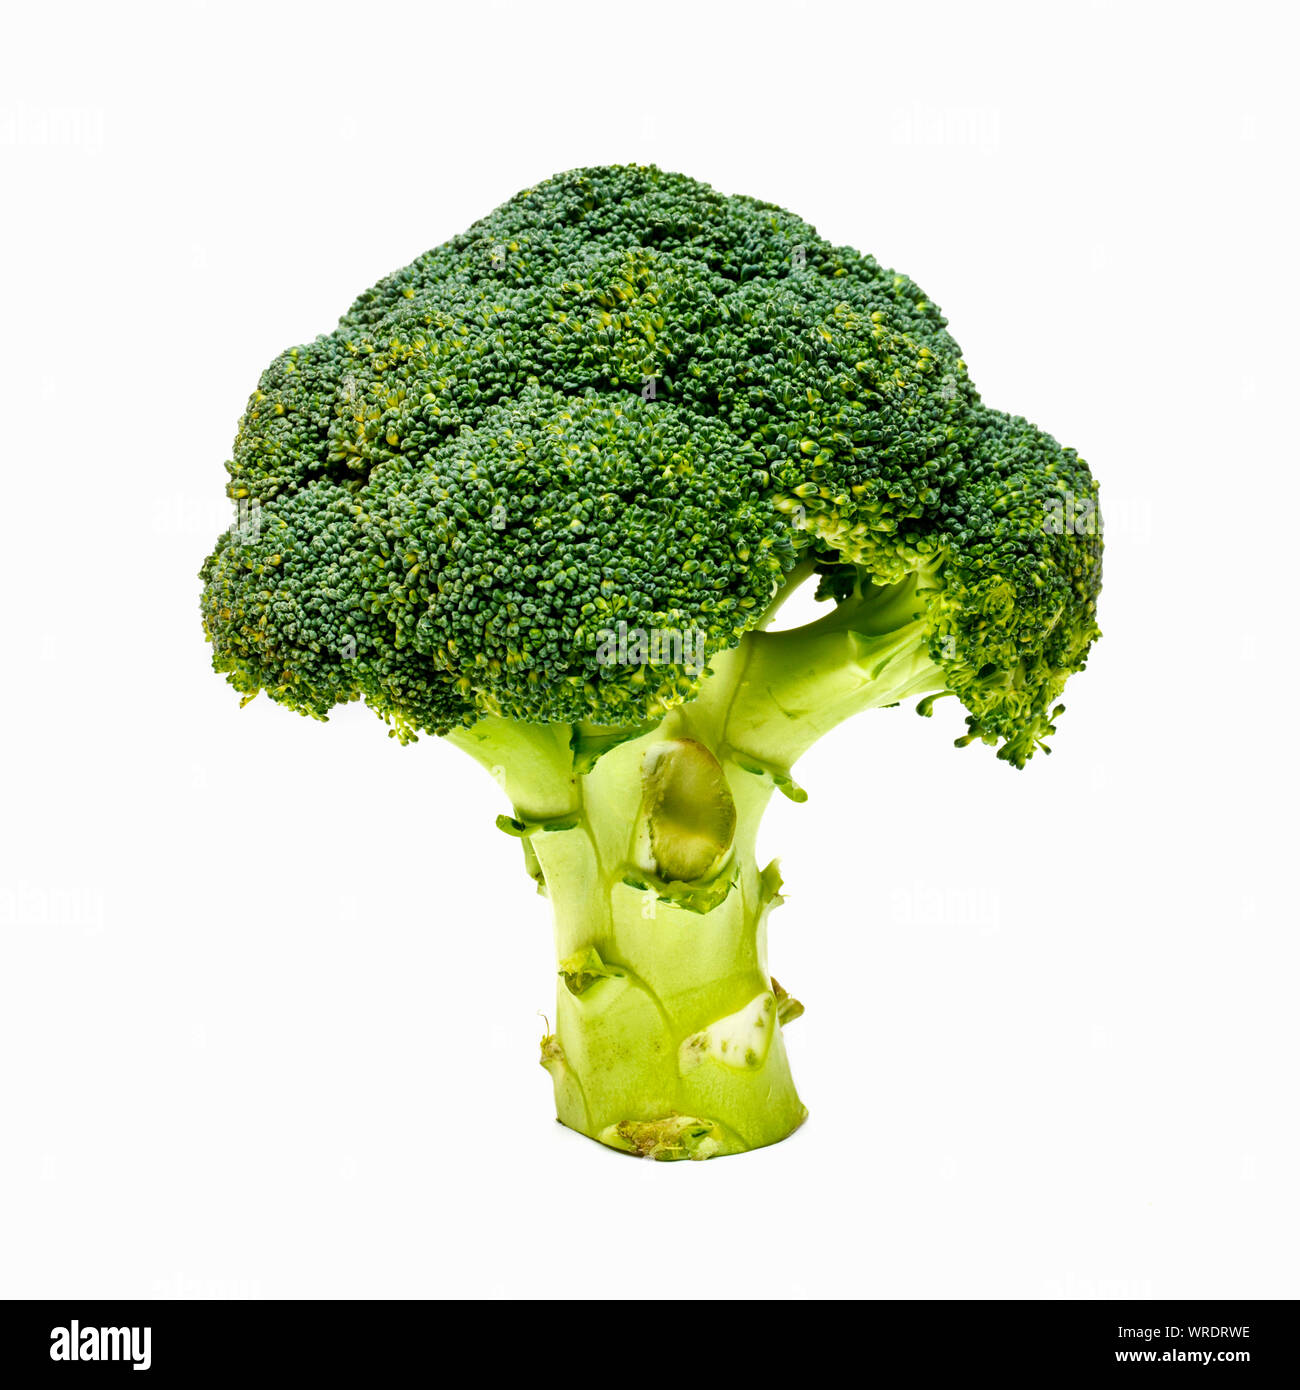 Broccoli stalk on a white background Stock Photo - Alamy